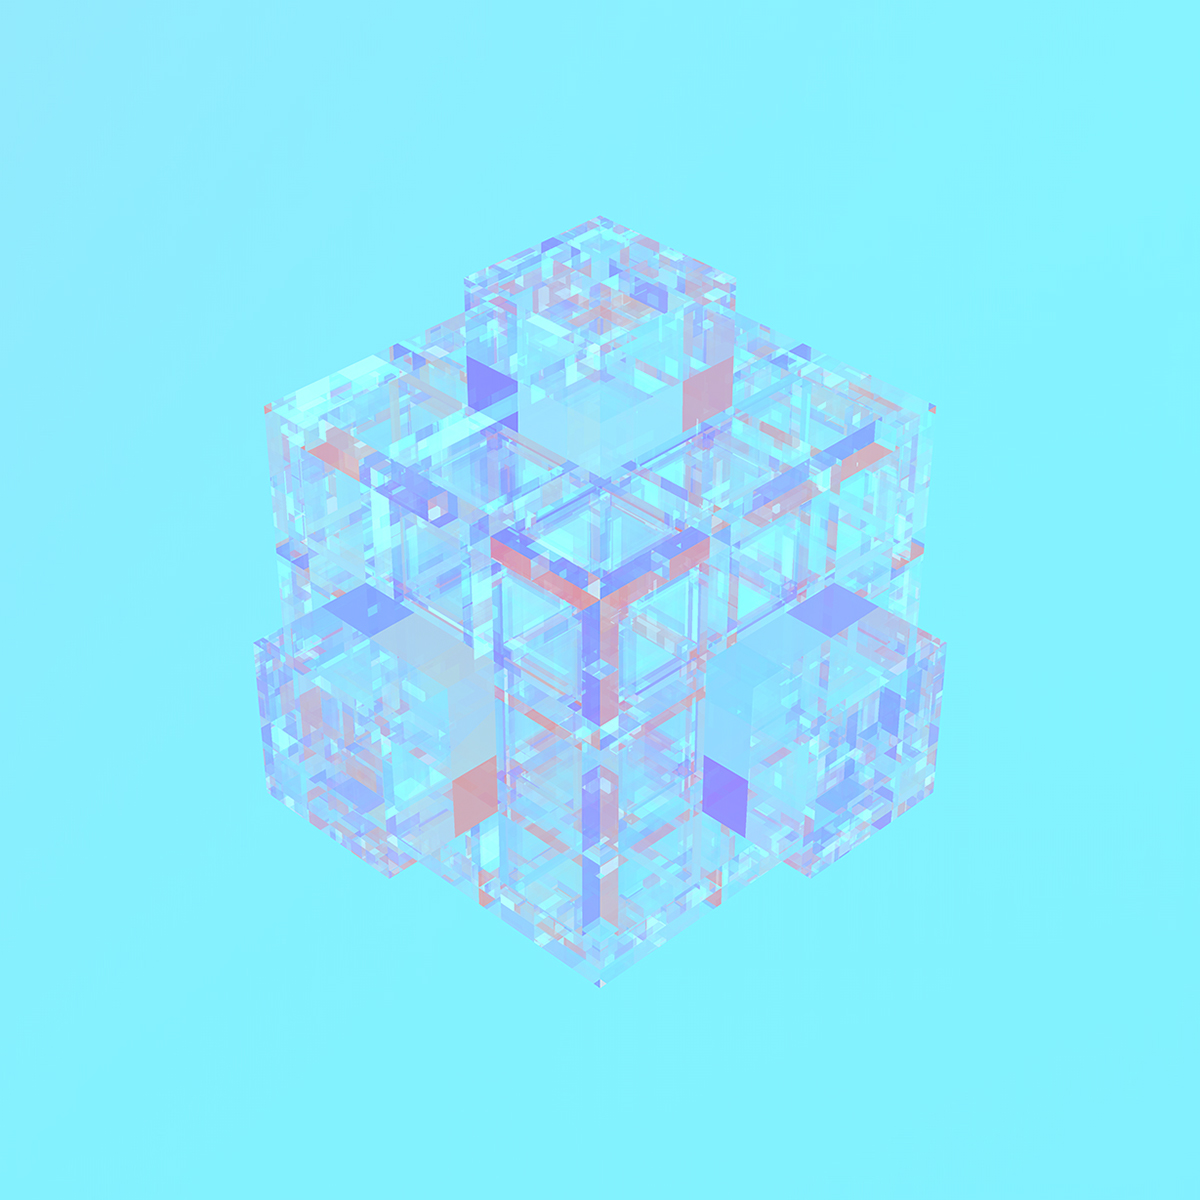 kaleidoscope experimental 3D cinema4d crystal solid platonic free Wallpapers 5k